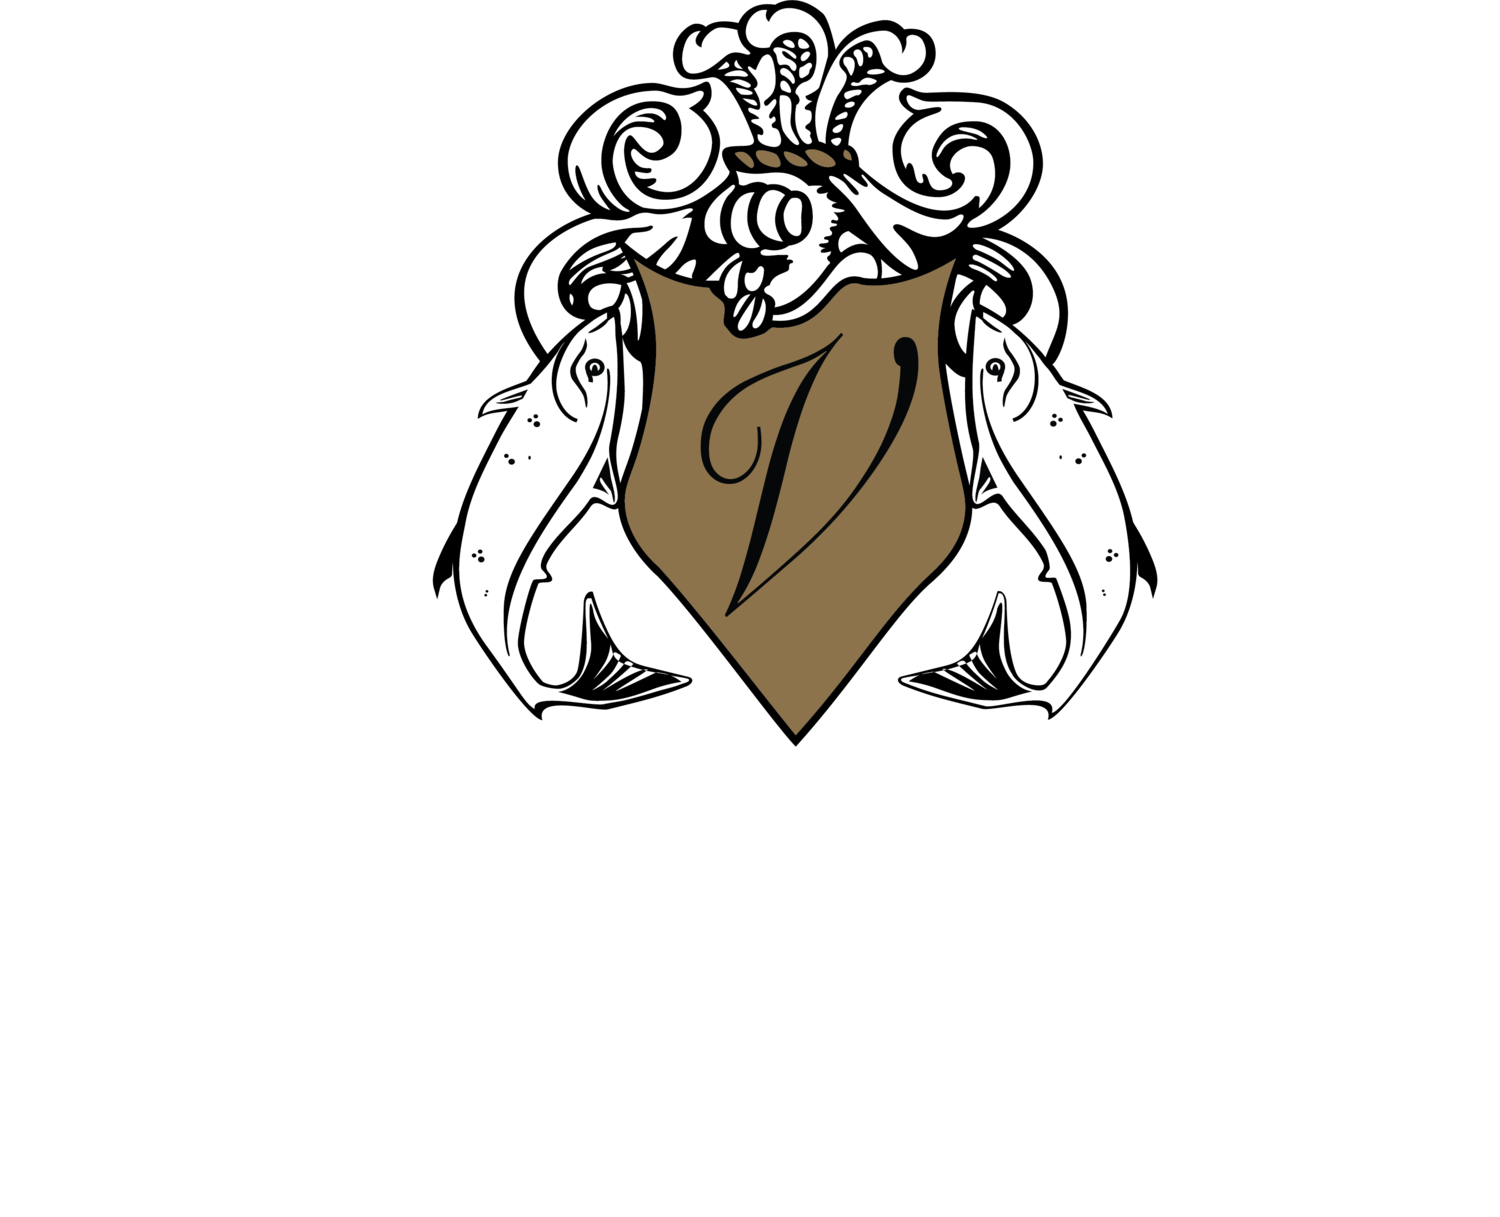 Victoria Island Smokehouse